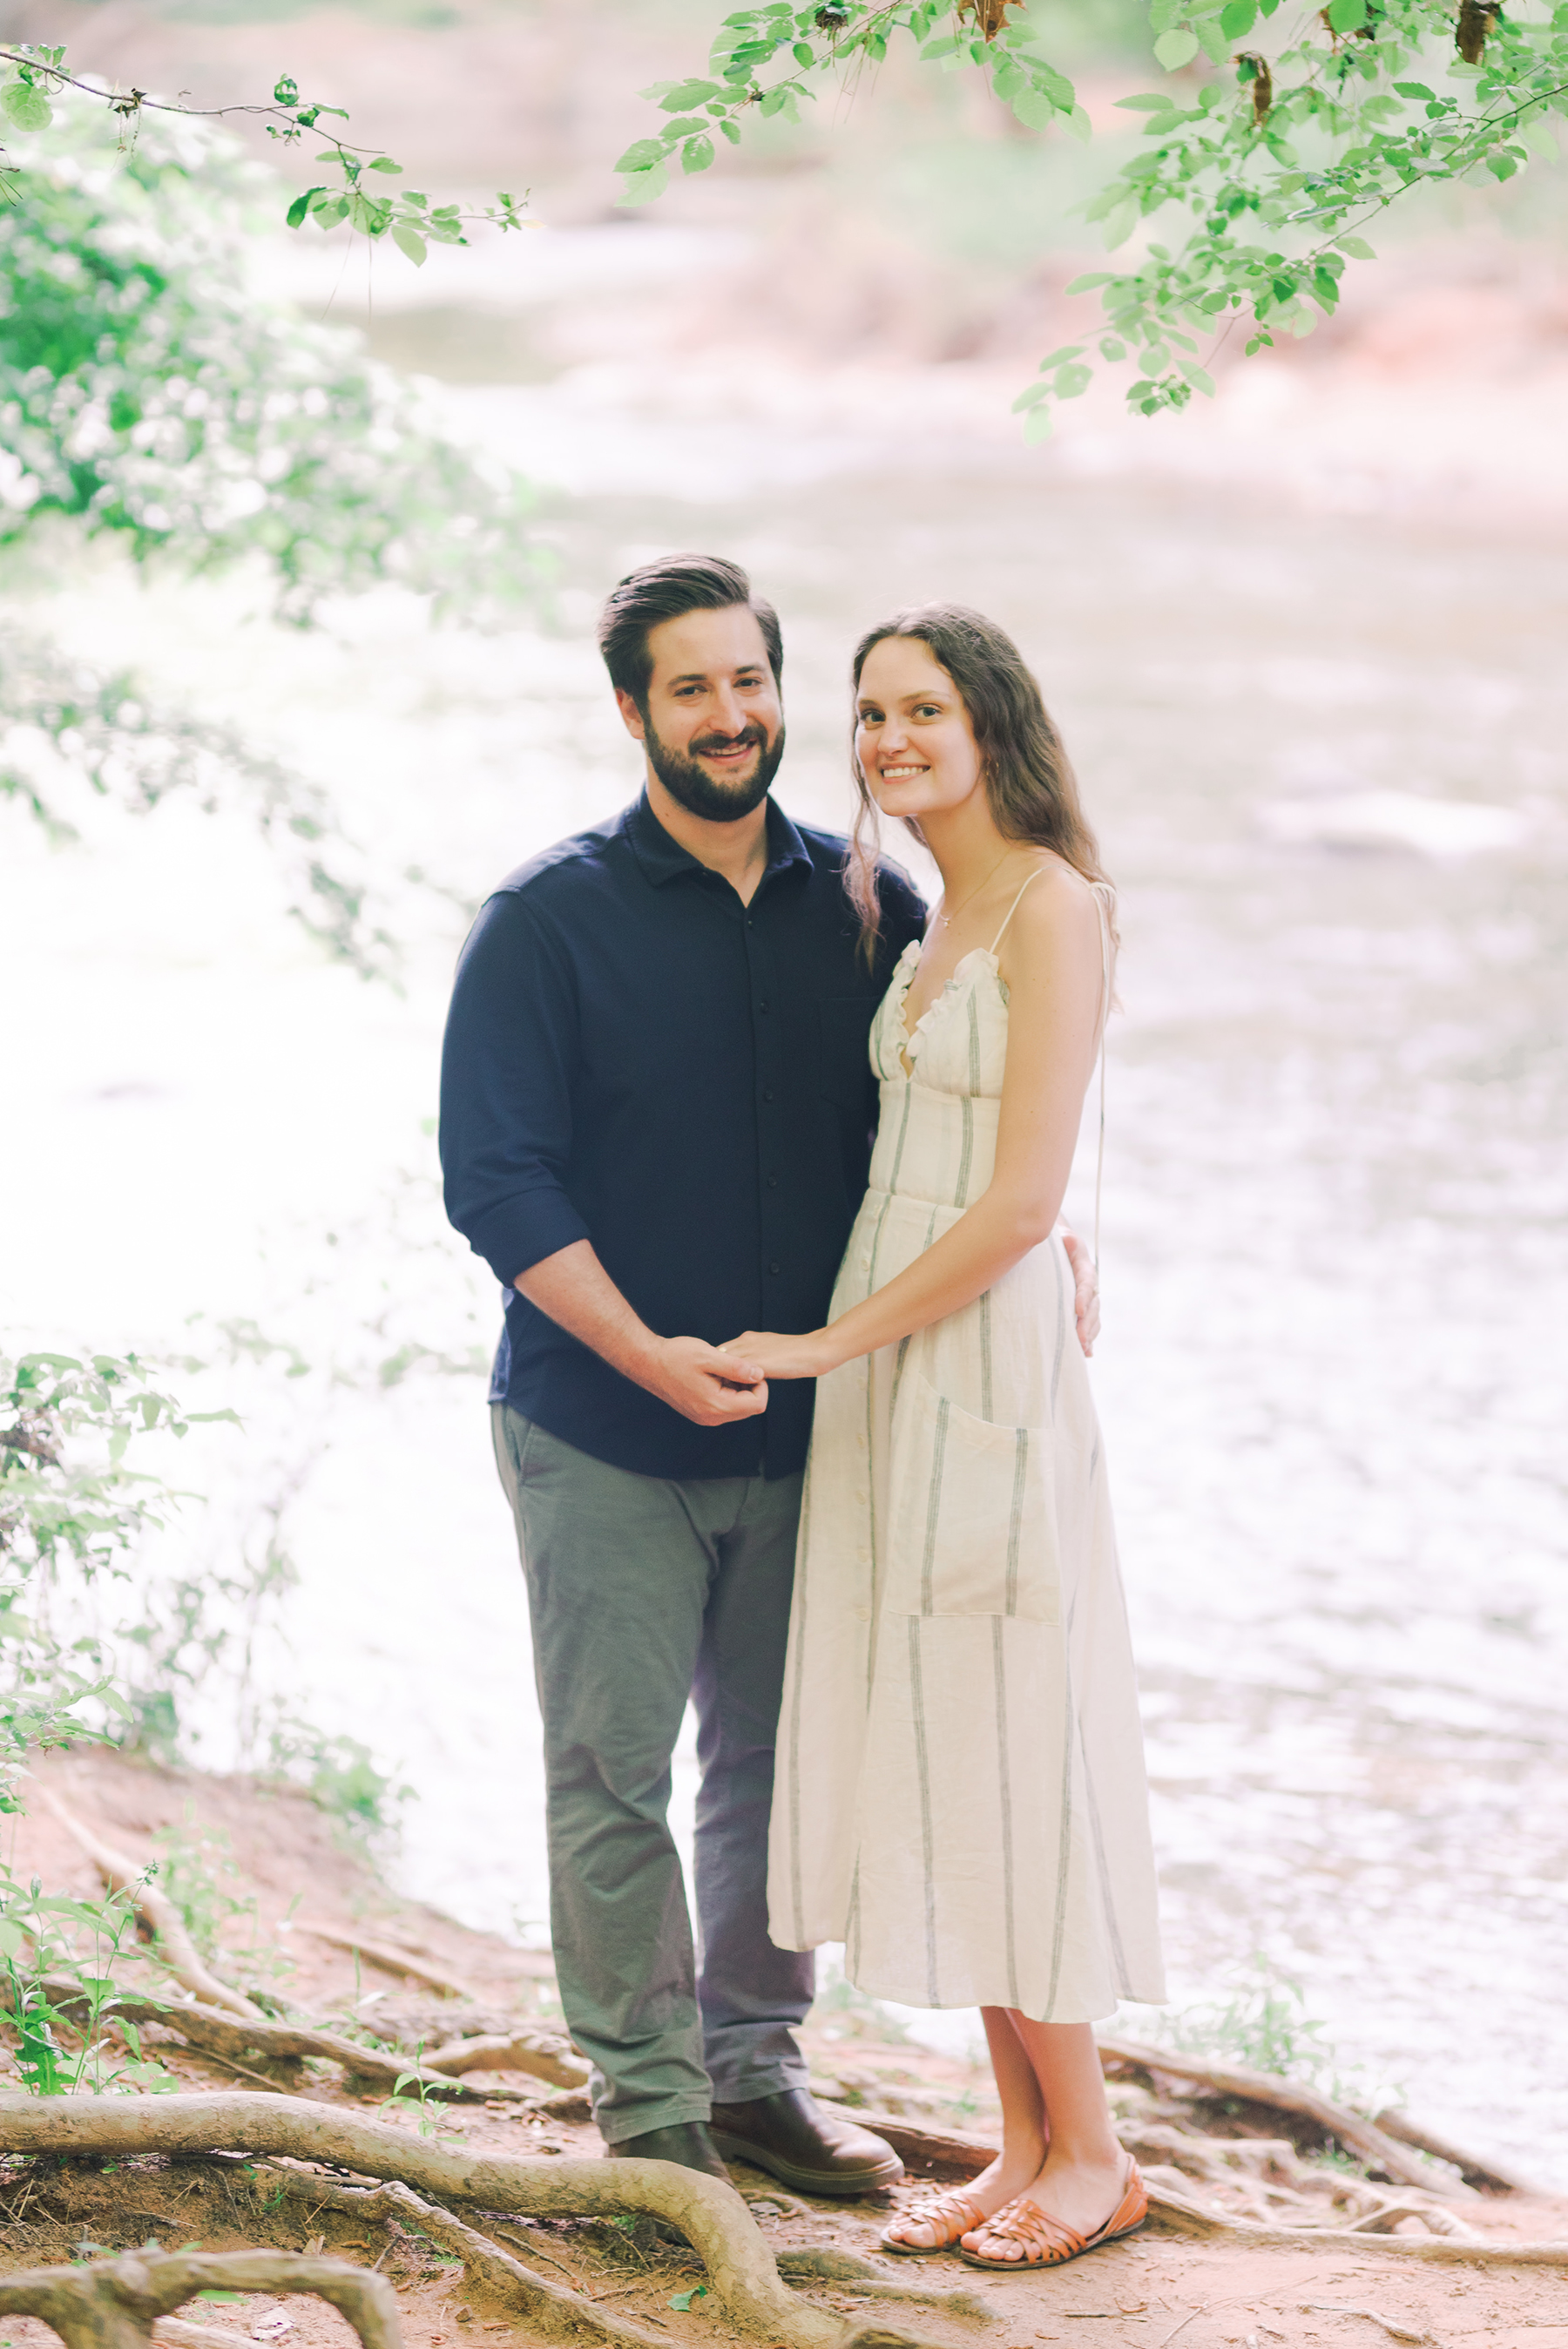 Victoria & Daniel | Engagement